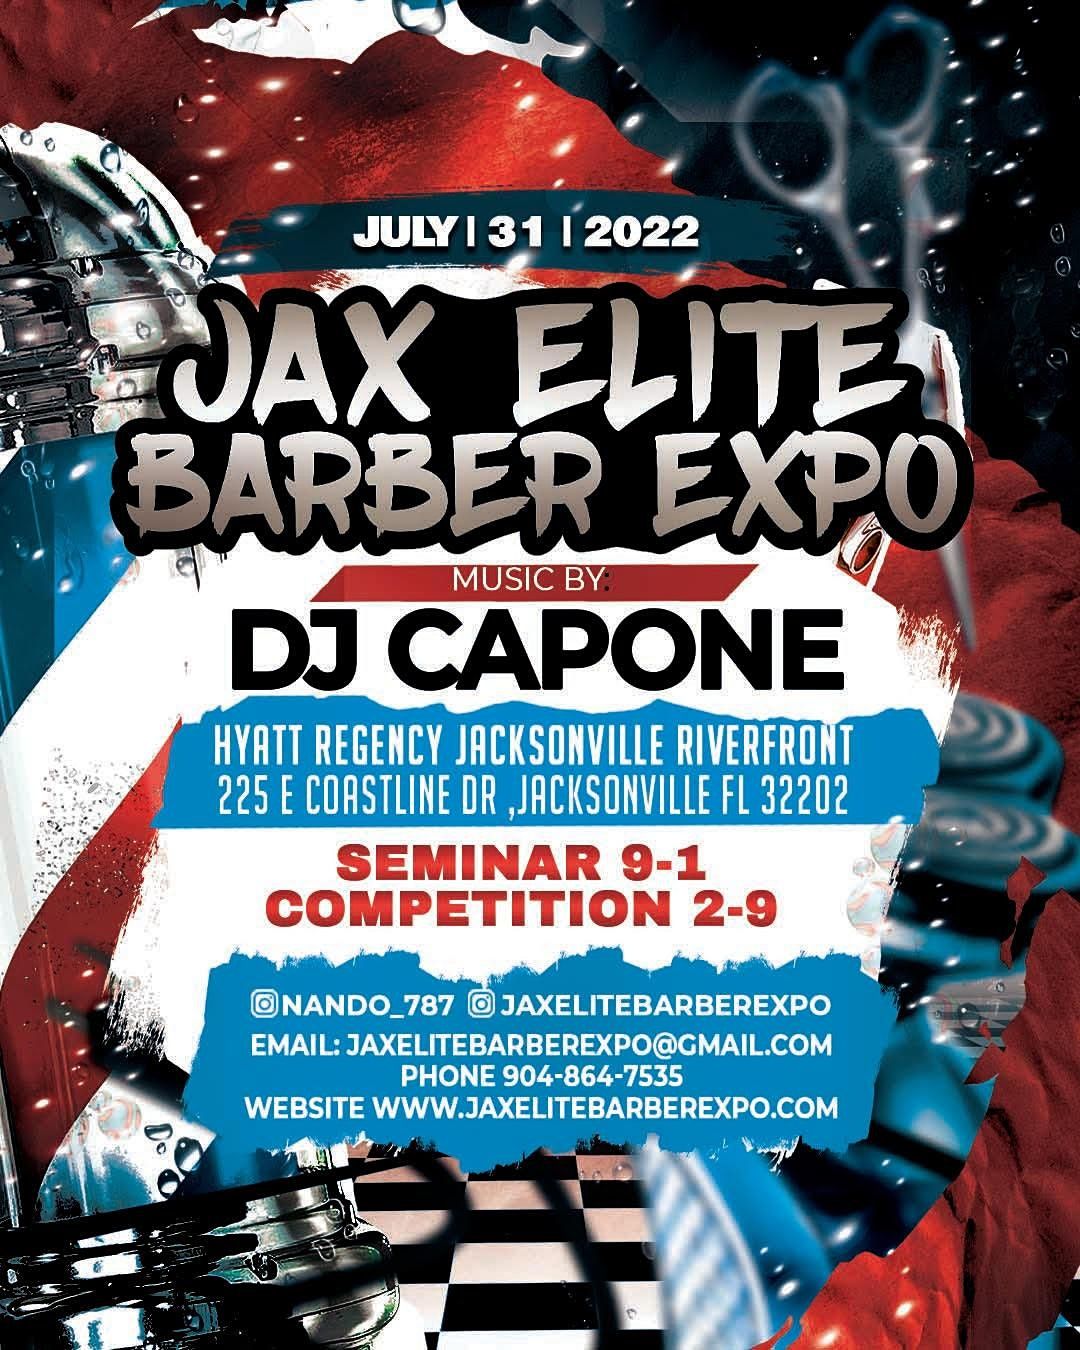 Jax Elite Barber Expo 2022 - Barber Battle